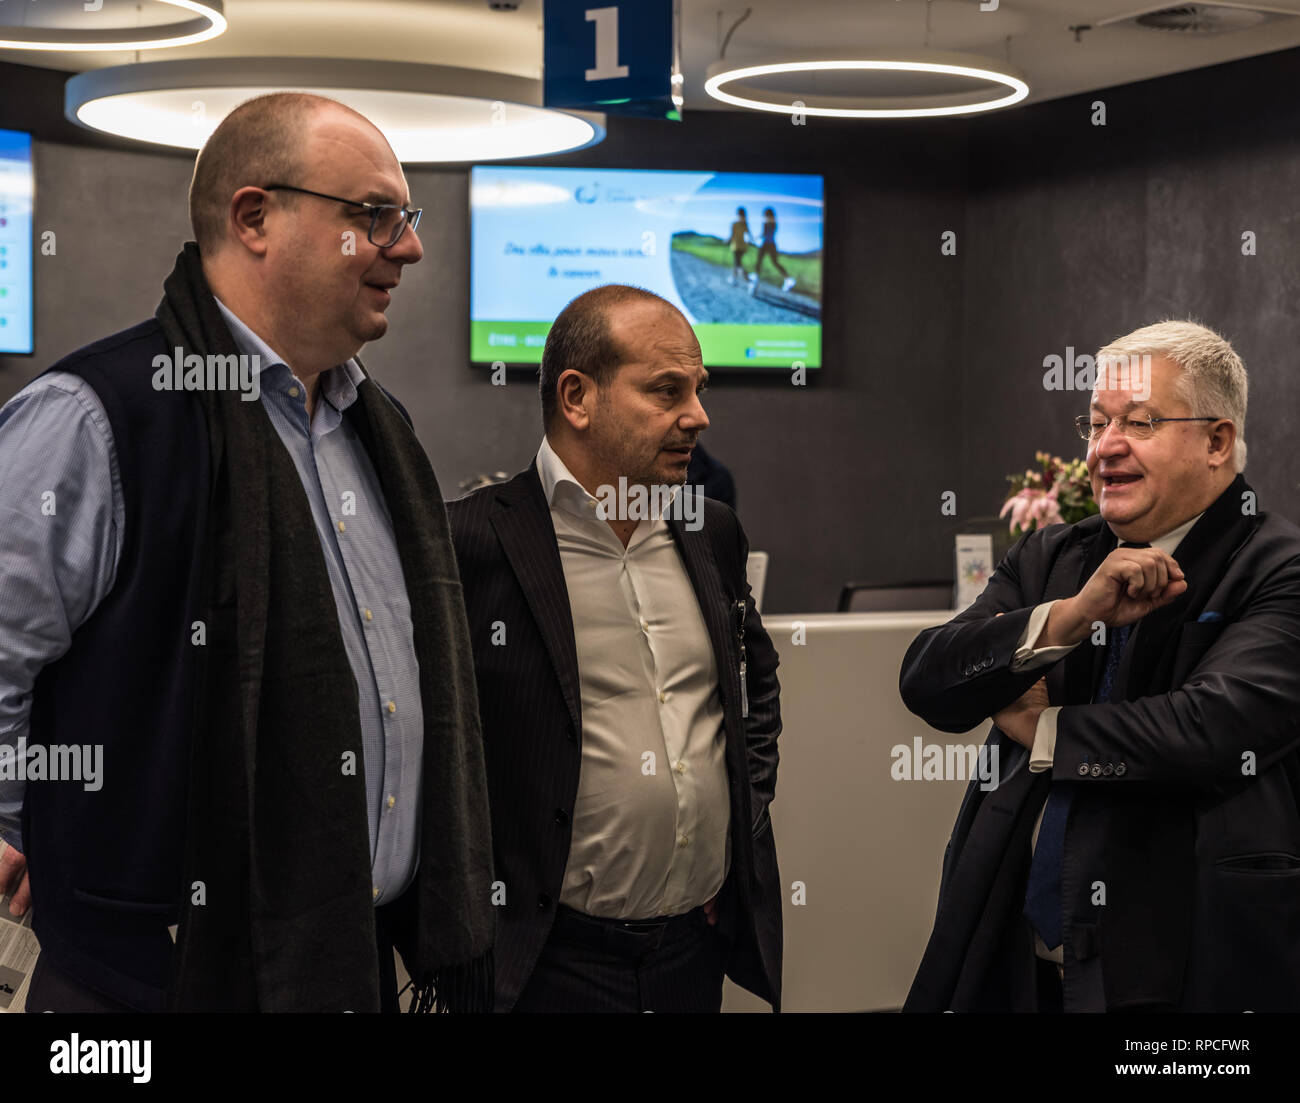 Auderghem, Brüssel/Belgien - 02 18 2019: Chief Excecutive director Doktor Philippe El Haddad und Brüssel Politiker Guy Vanhengel diskutieren. Stockfoto